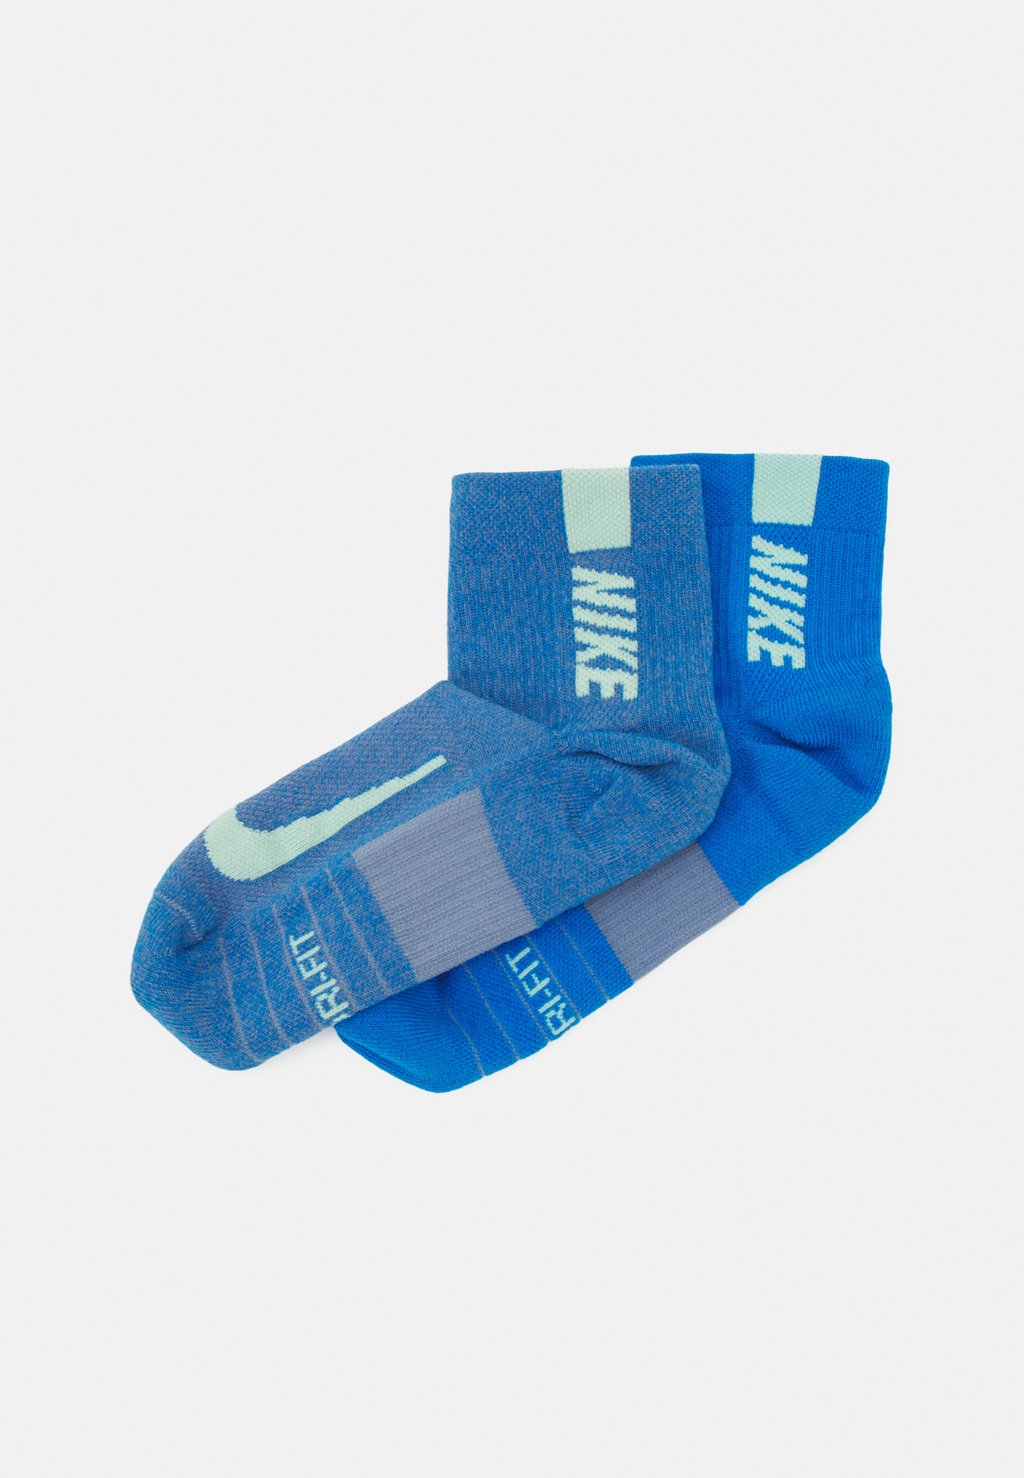 Спортивные носки Ankle Unisex 2 Pack Nike, цвет photo blue ashen slate(vapor green)/photo blue(vapor green)